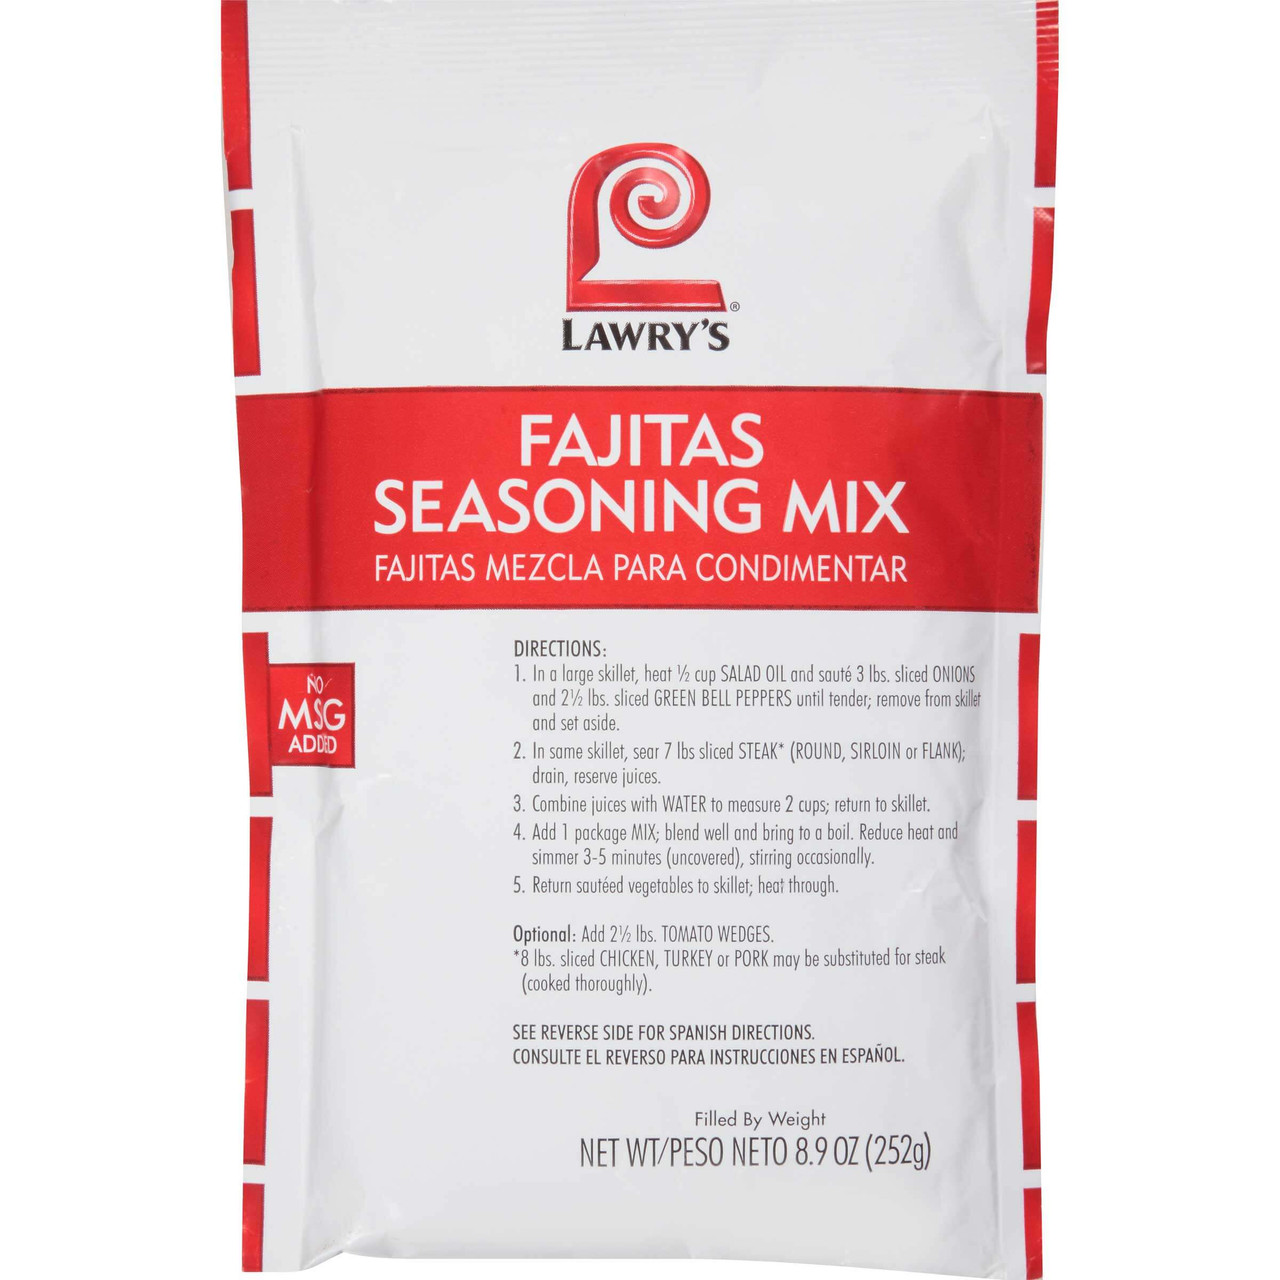 Lawry's Fajitas Seasoning Mix, 8.9 oz. - 6/Case - Authentic Blend for Fajitas - Chicken Pieces